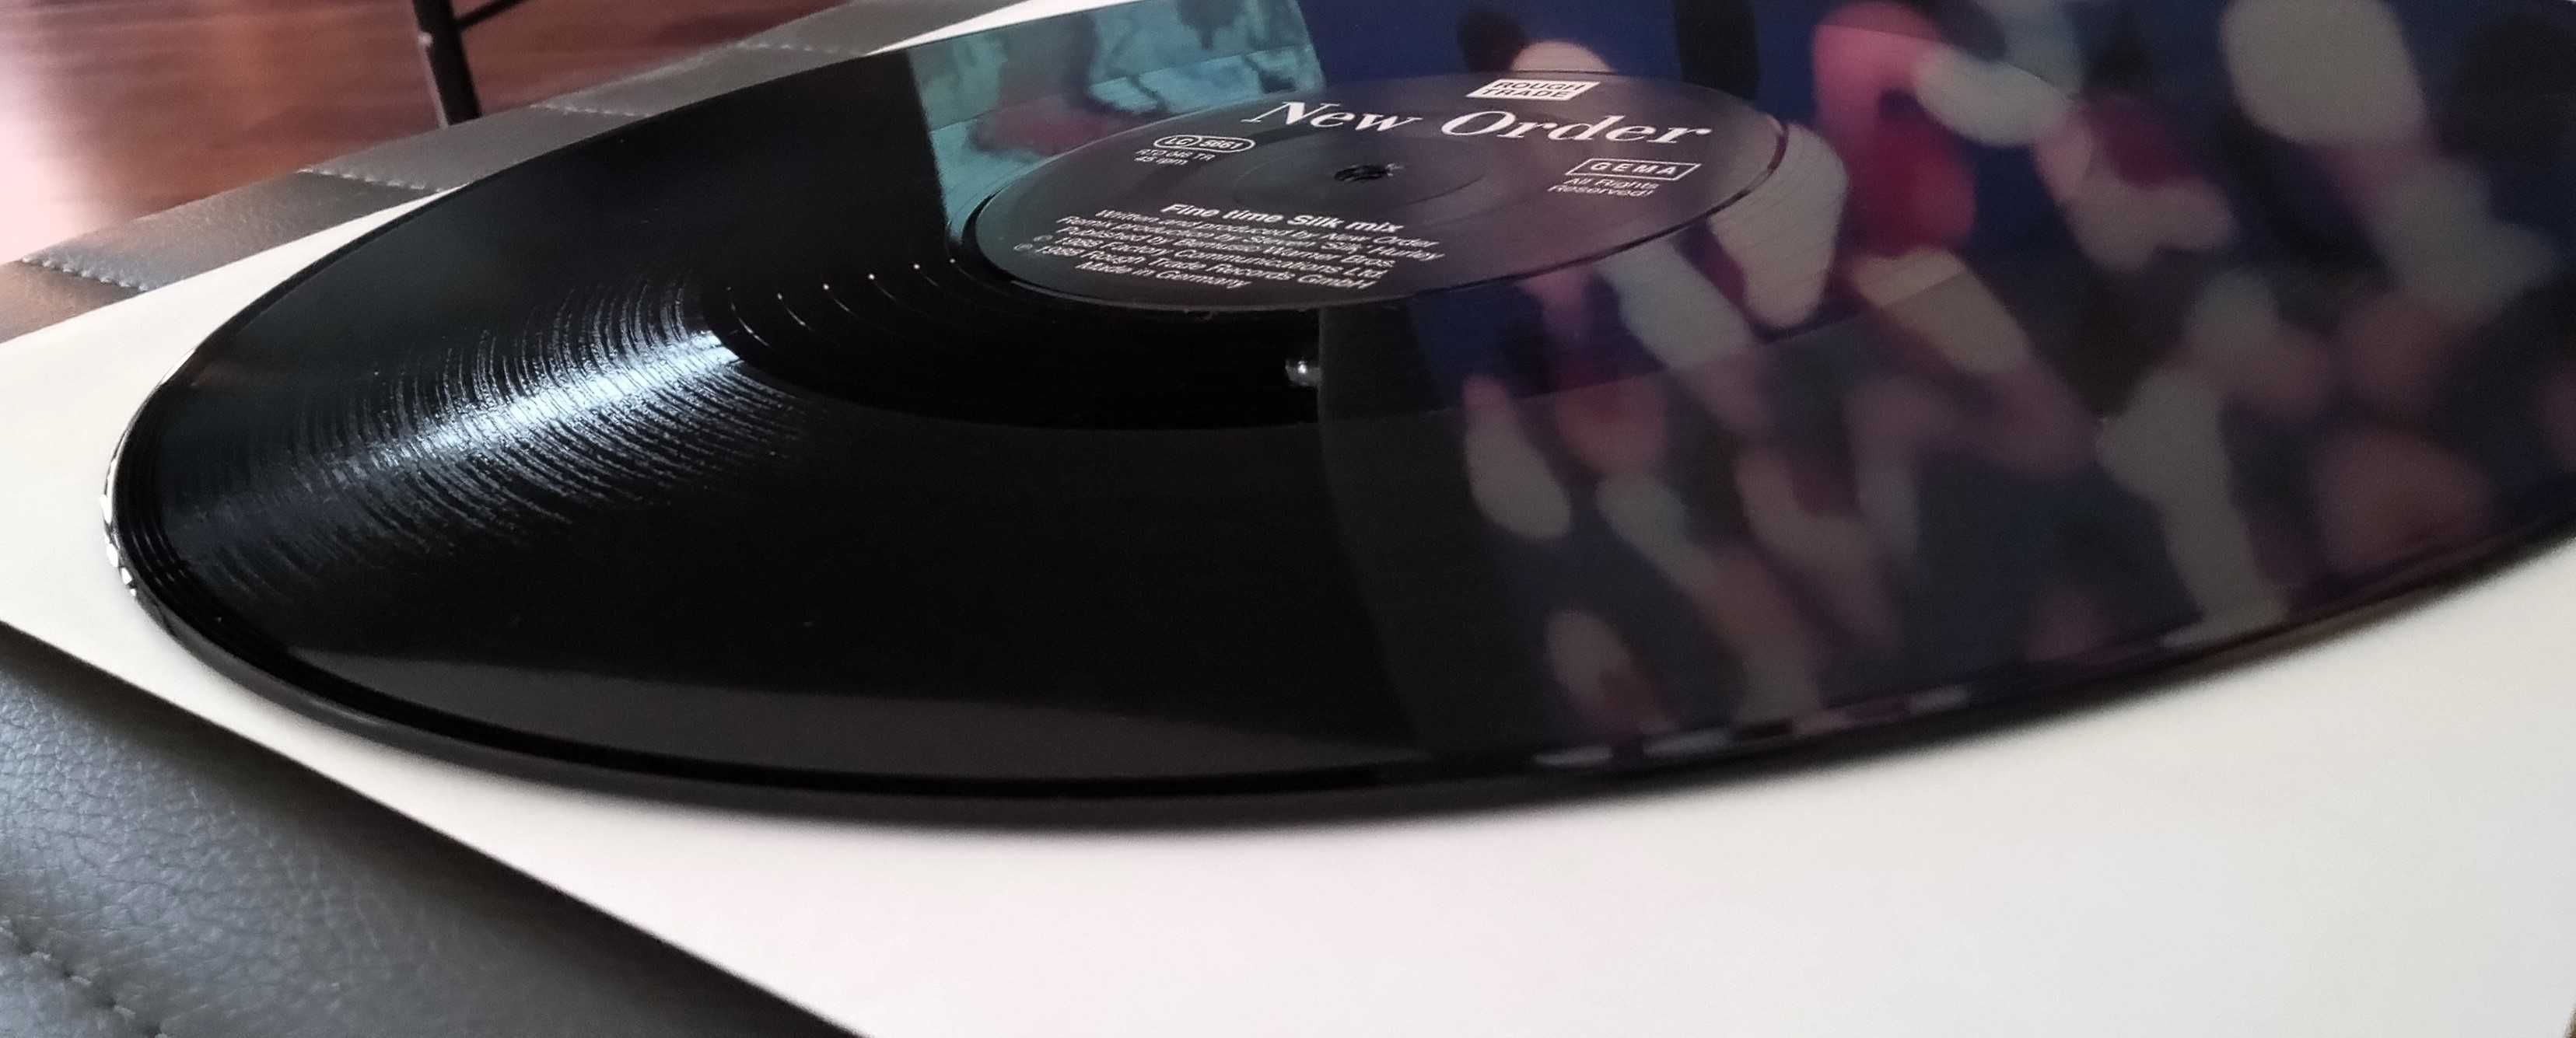 Płyta Winylowa New Order (byłe Joy Division) Fine Time Silk Mix+GRATIS